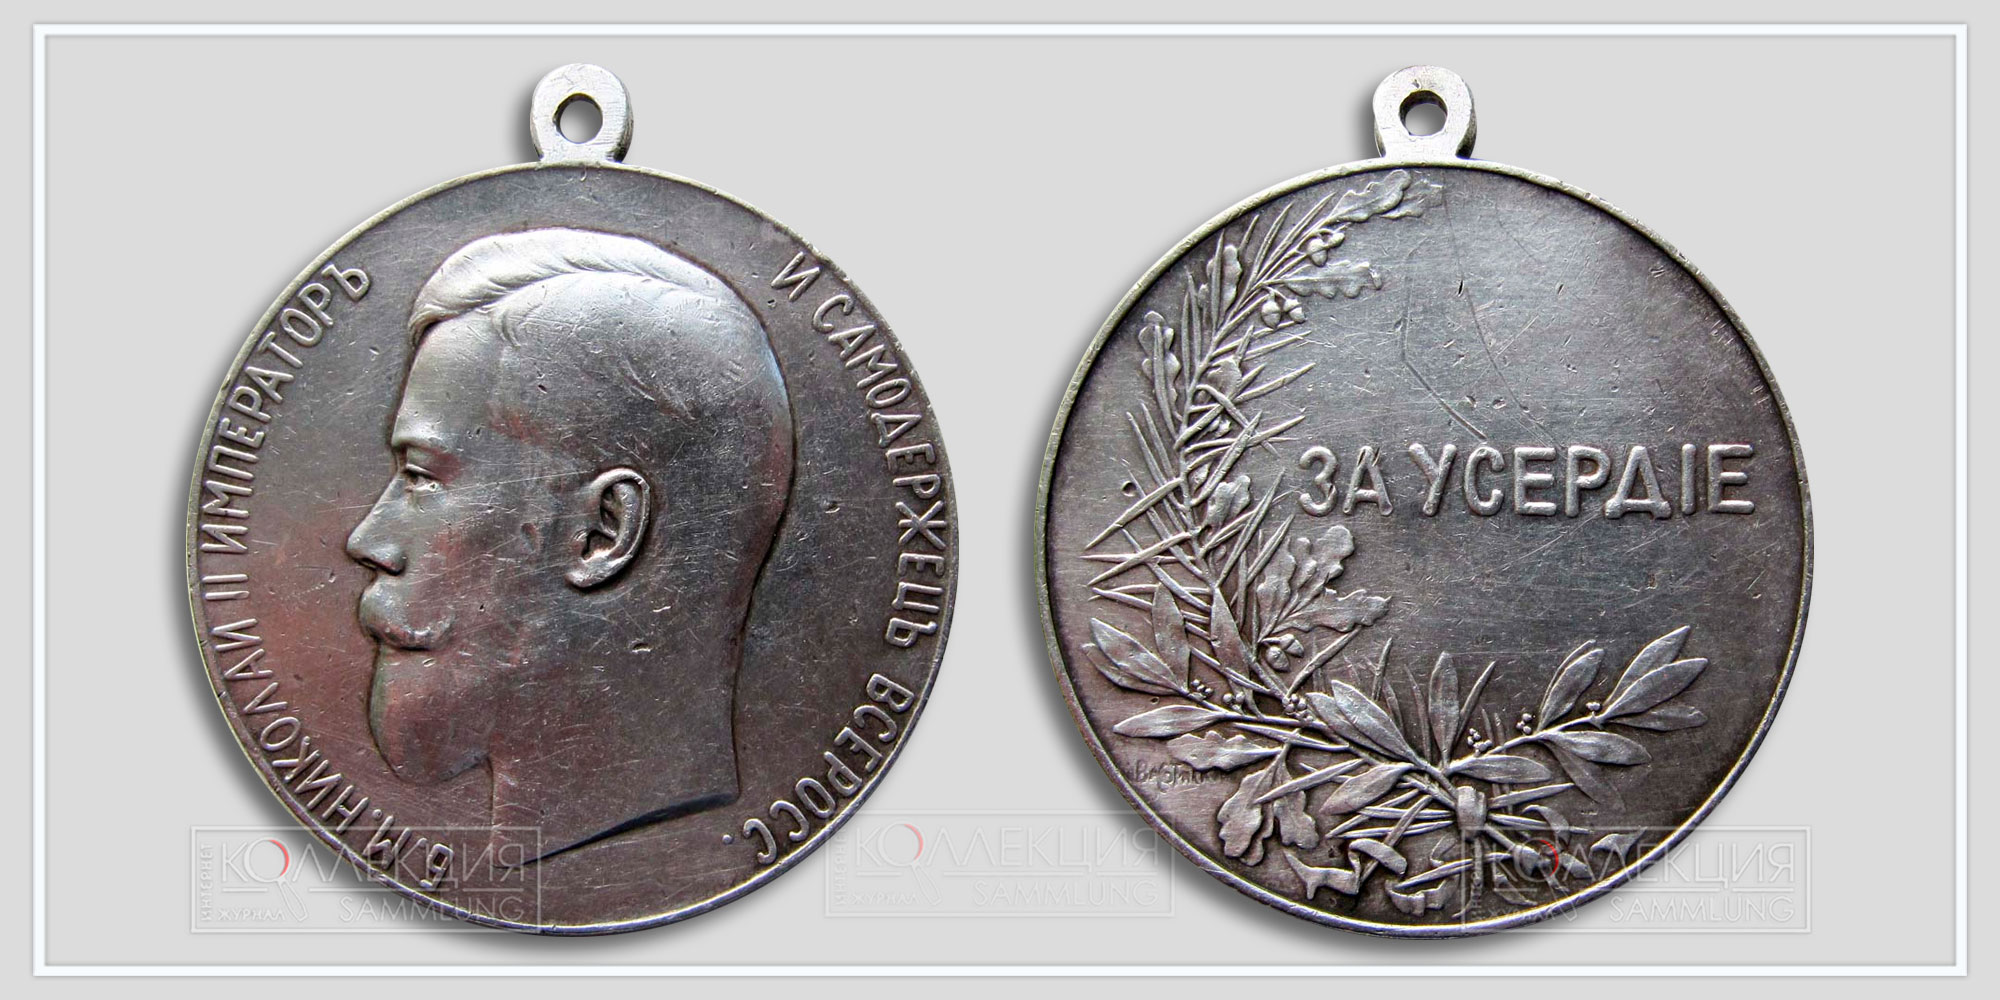 Медаль "За усердие" Николай II Серебро Диаметр 51,4 мм Вес 58,0 г Из архива Фалеристика.инфо Разместил коллега Сибирякъ